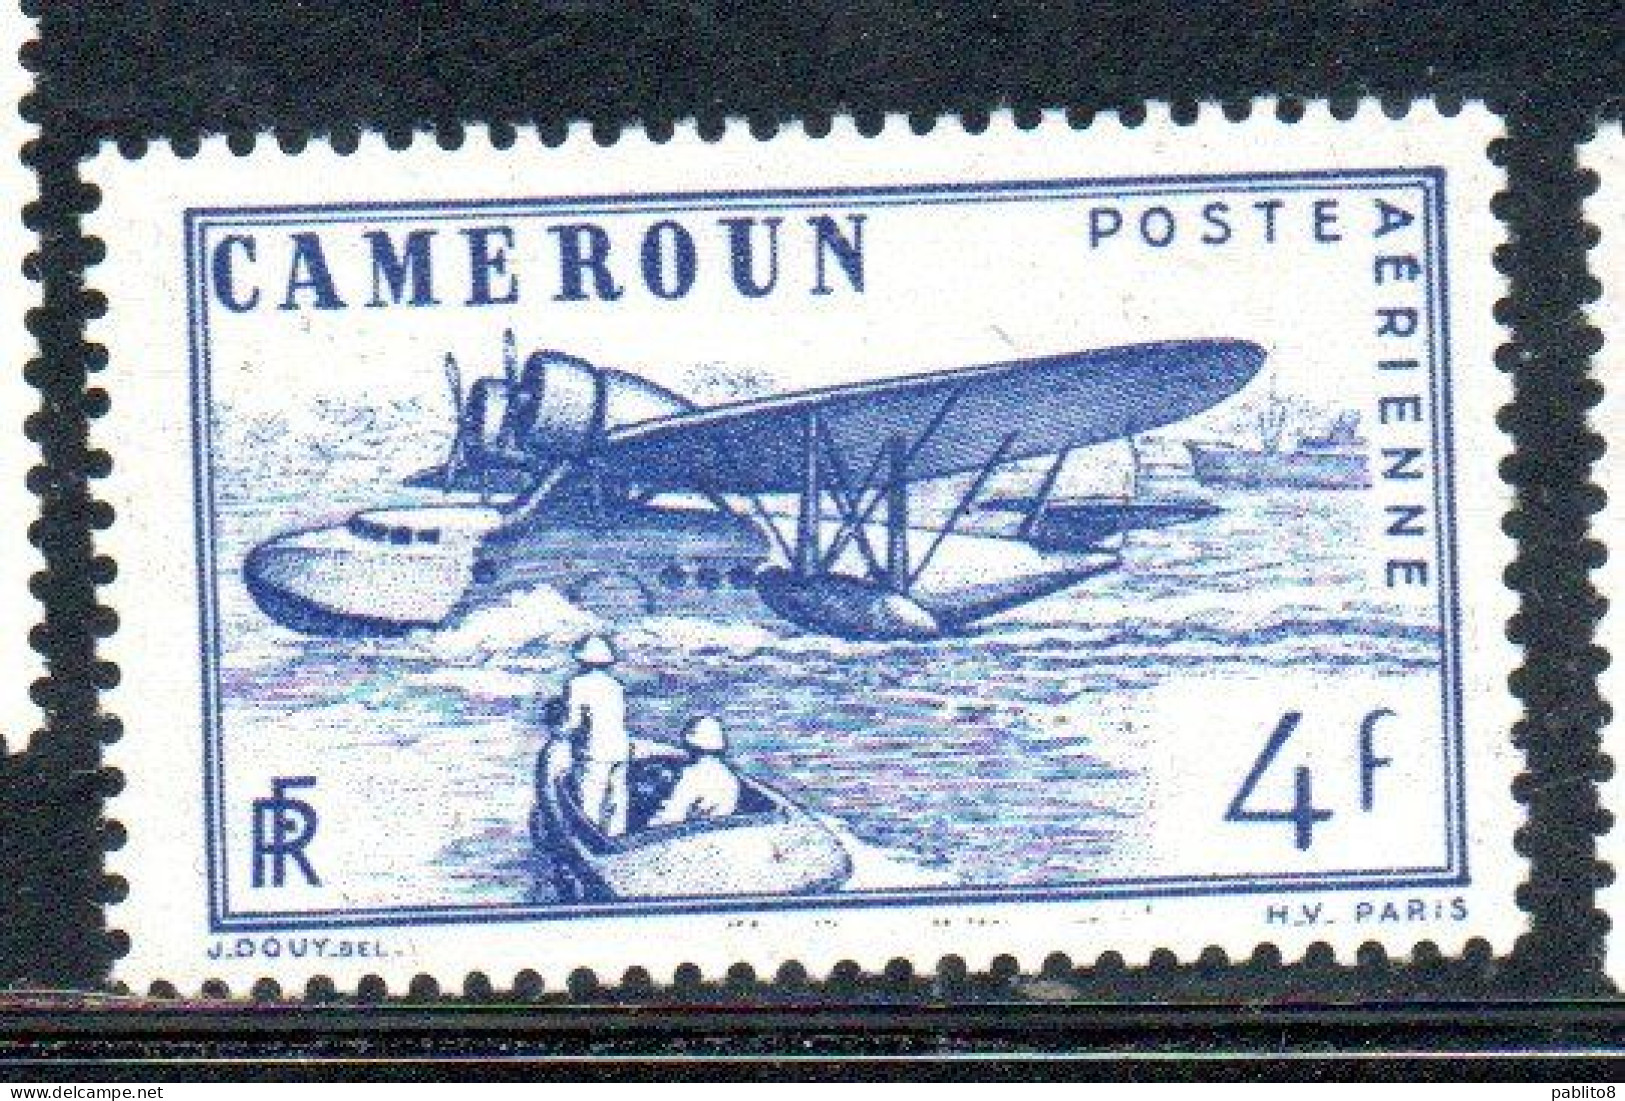 CAMEROUN CAMERUN 1943 1944 AIR POST MAIL AIRMAIL POSTA AEREA POST AERIENNE SEAPLANE ALIGHTING 4fr MNH - Poste Aérienne